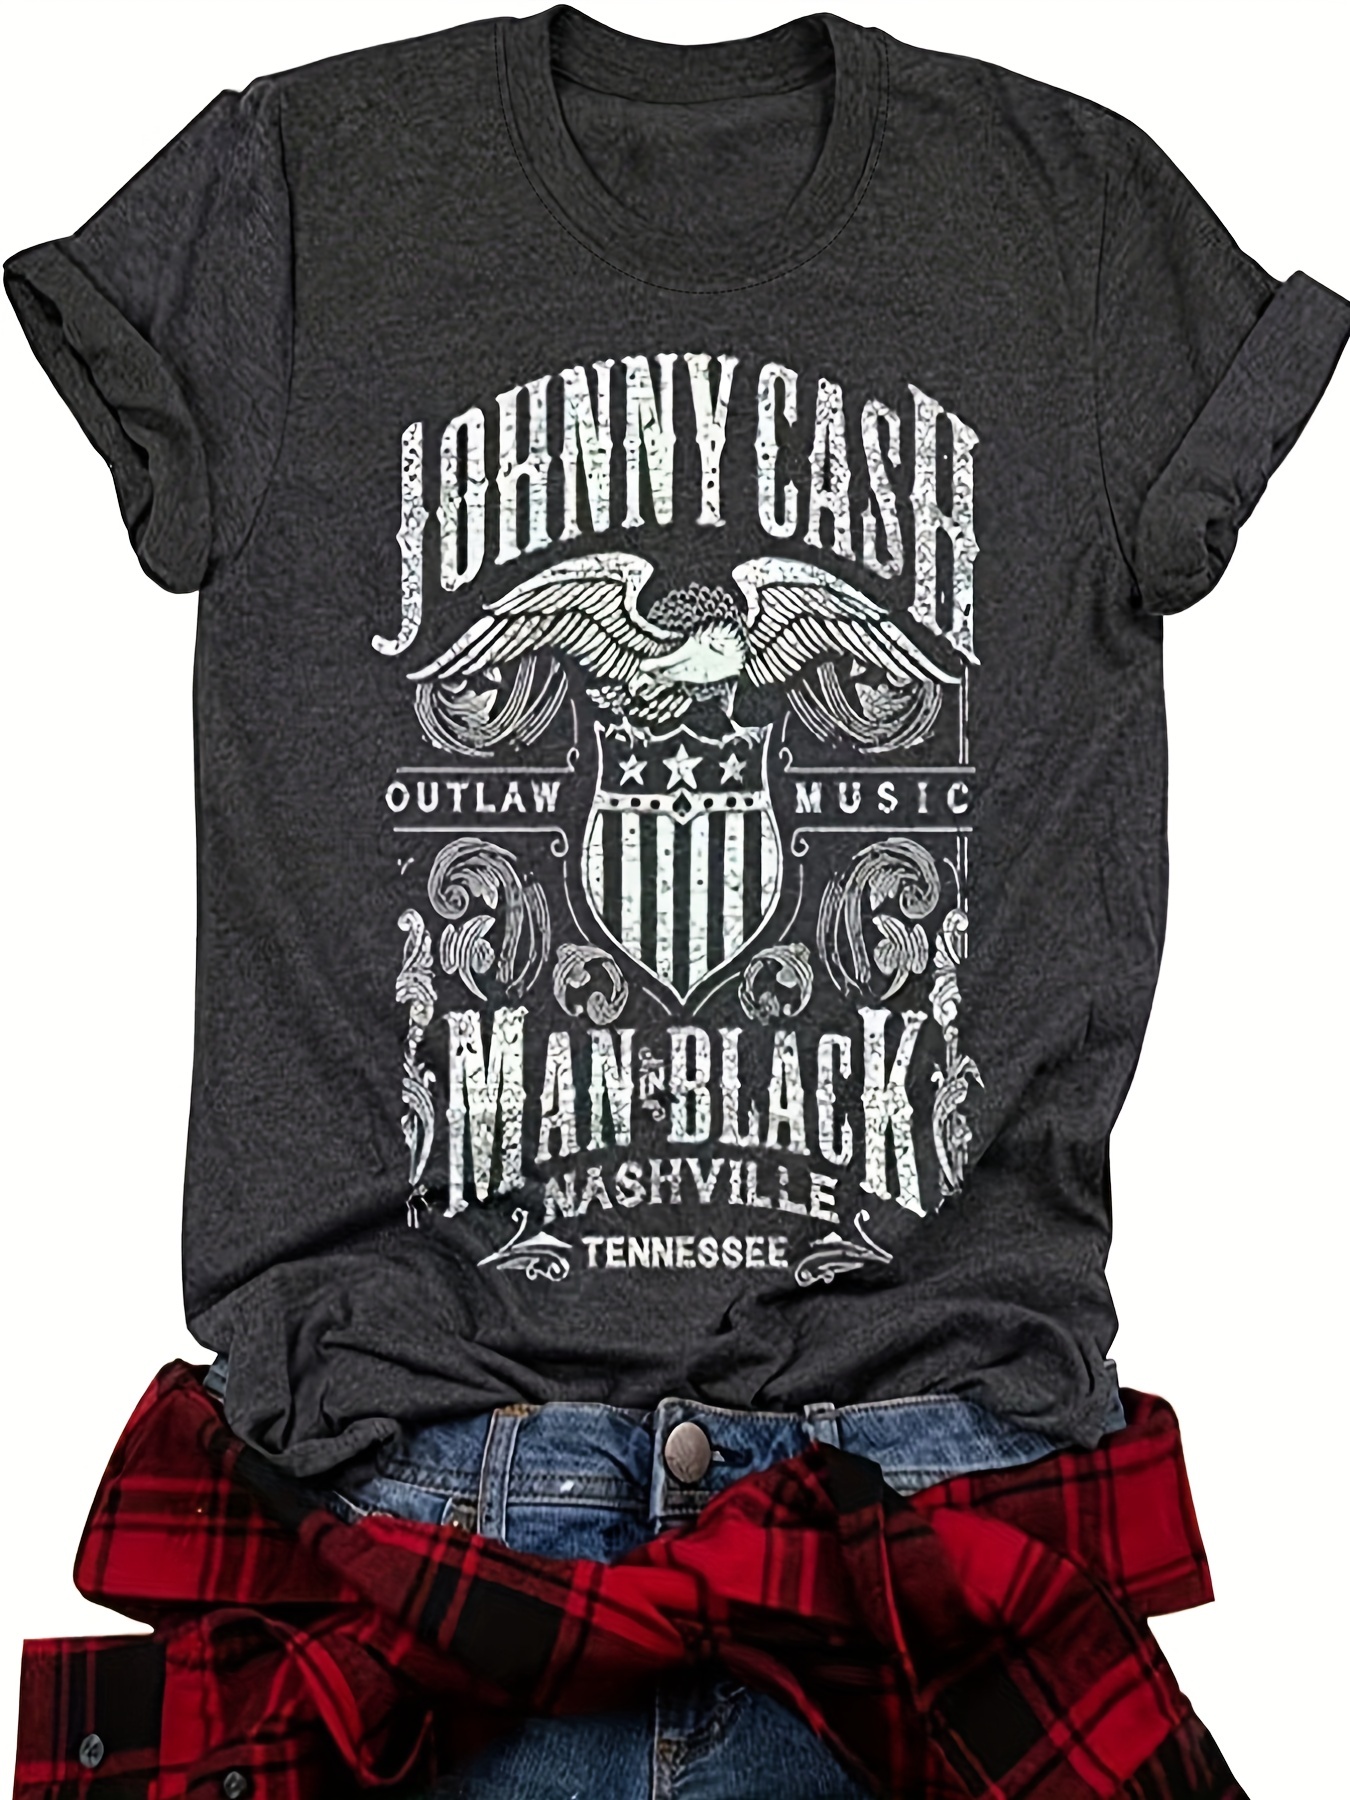 Camiseta de Nashville Tennessee. Camiseta personalizada. Camisa de